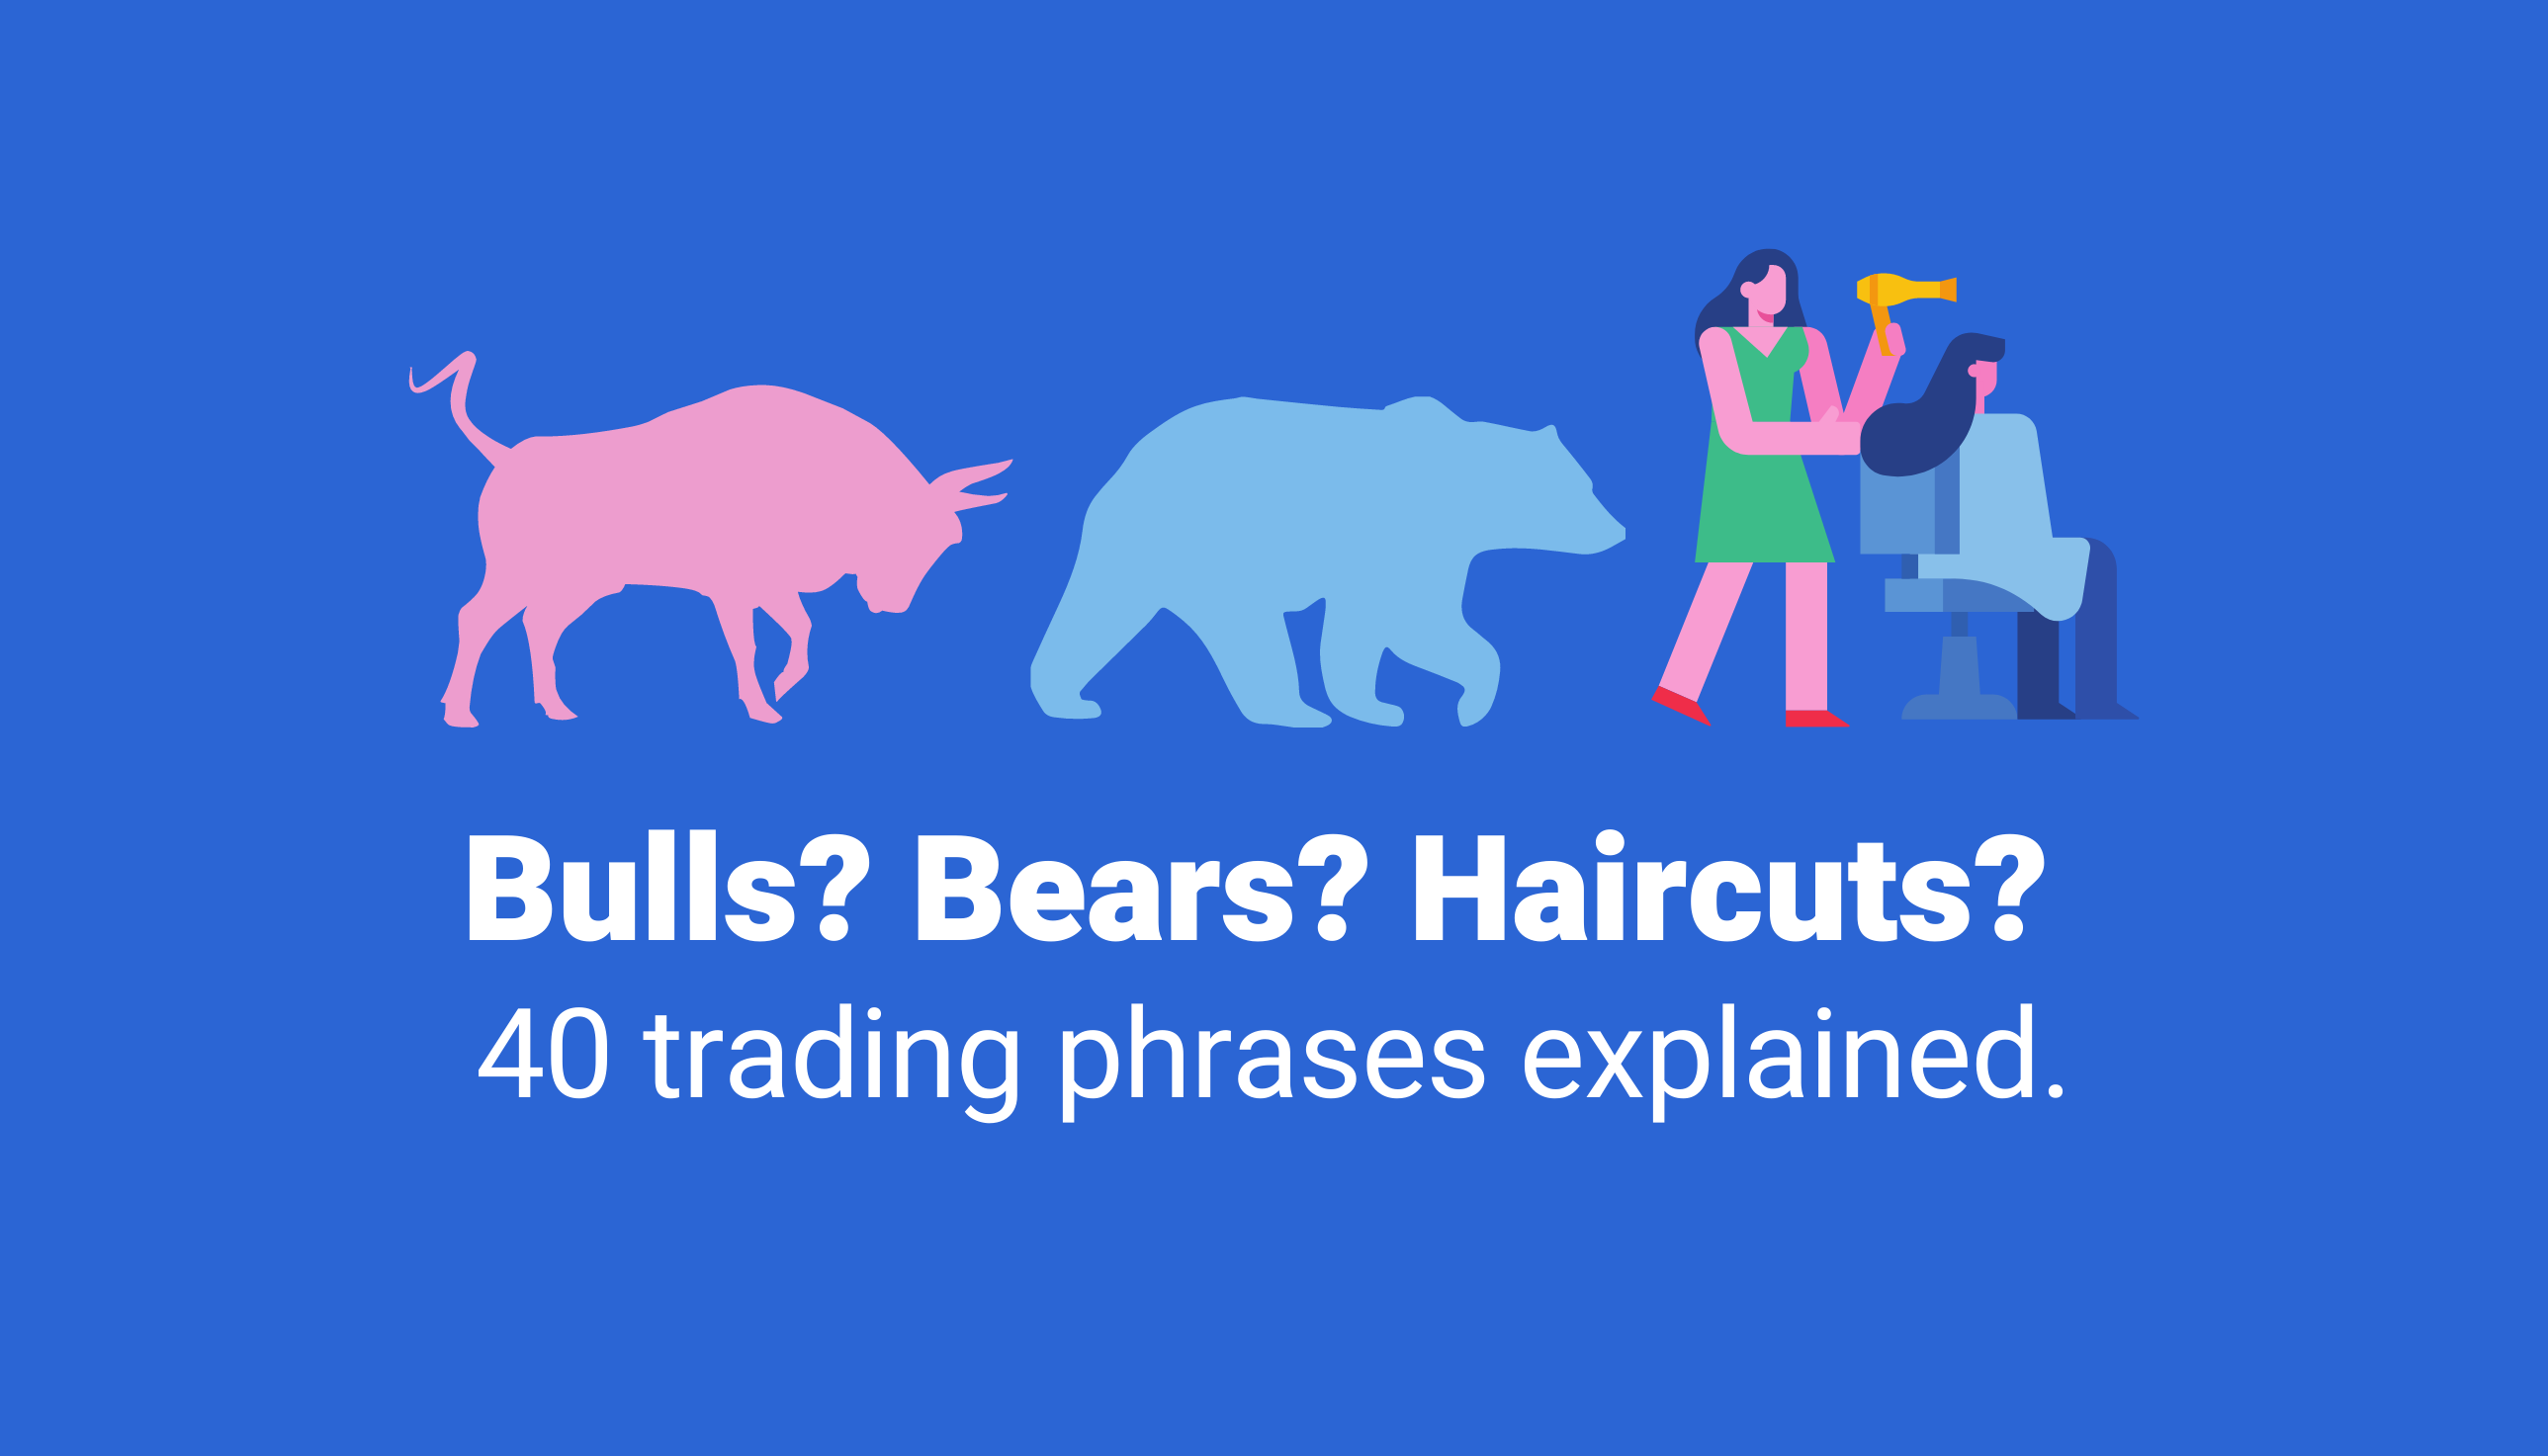 Bulls? Bears? Haircuts? 40 trading phrases explained